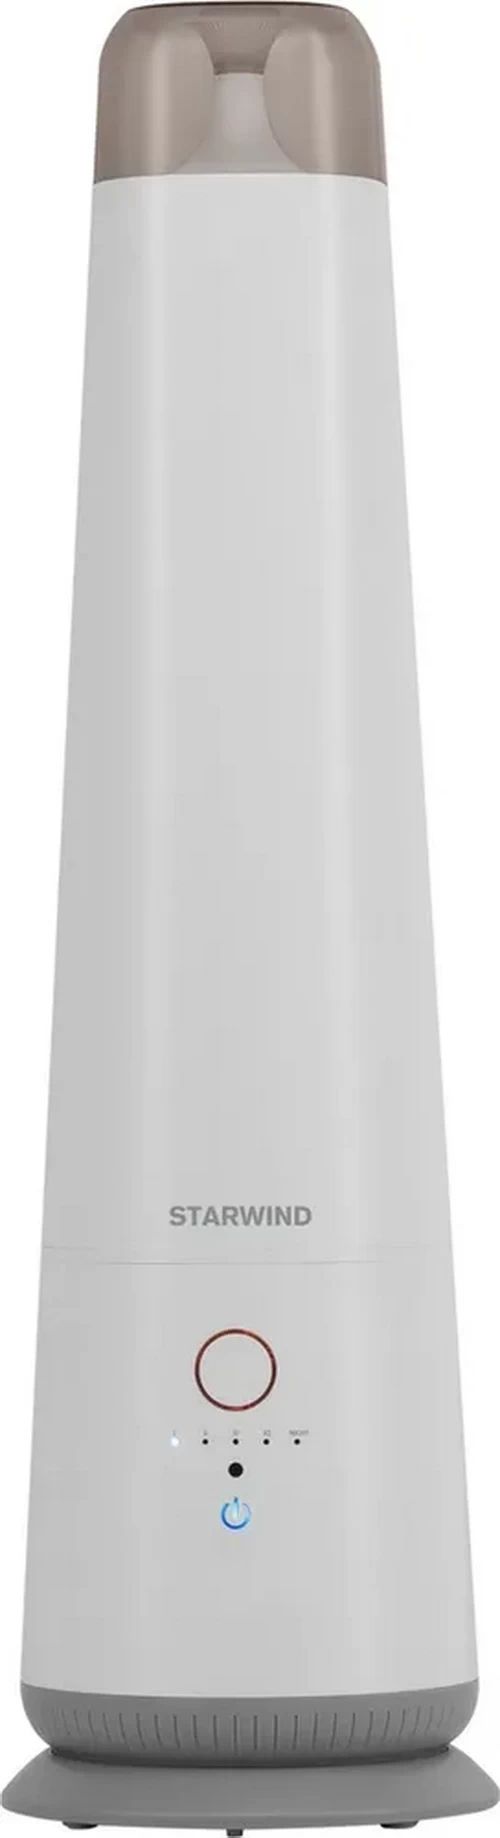 Воздухоувлажнитель STARWIND SHC1550 белый увлажнитель воздуха starwind shc1550 белый серый